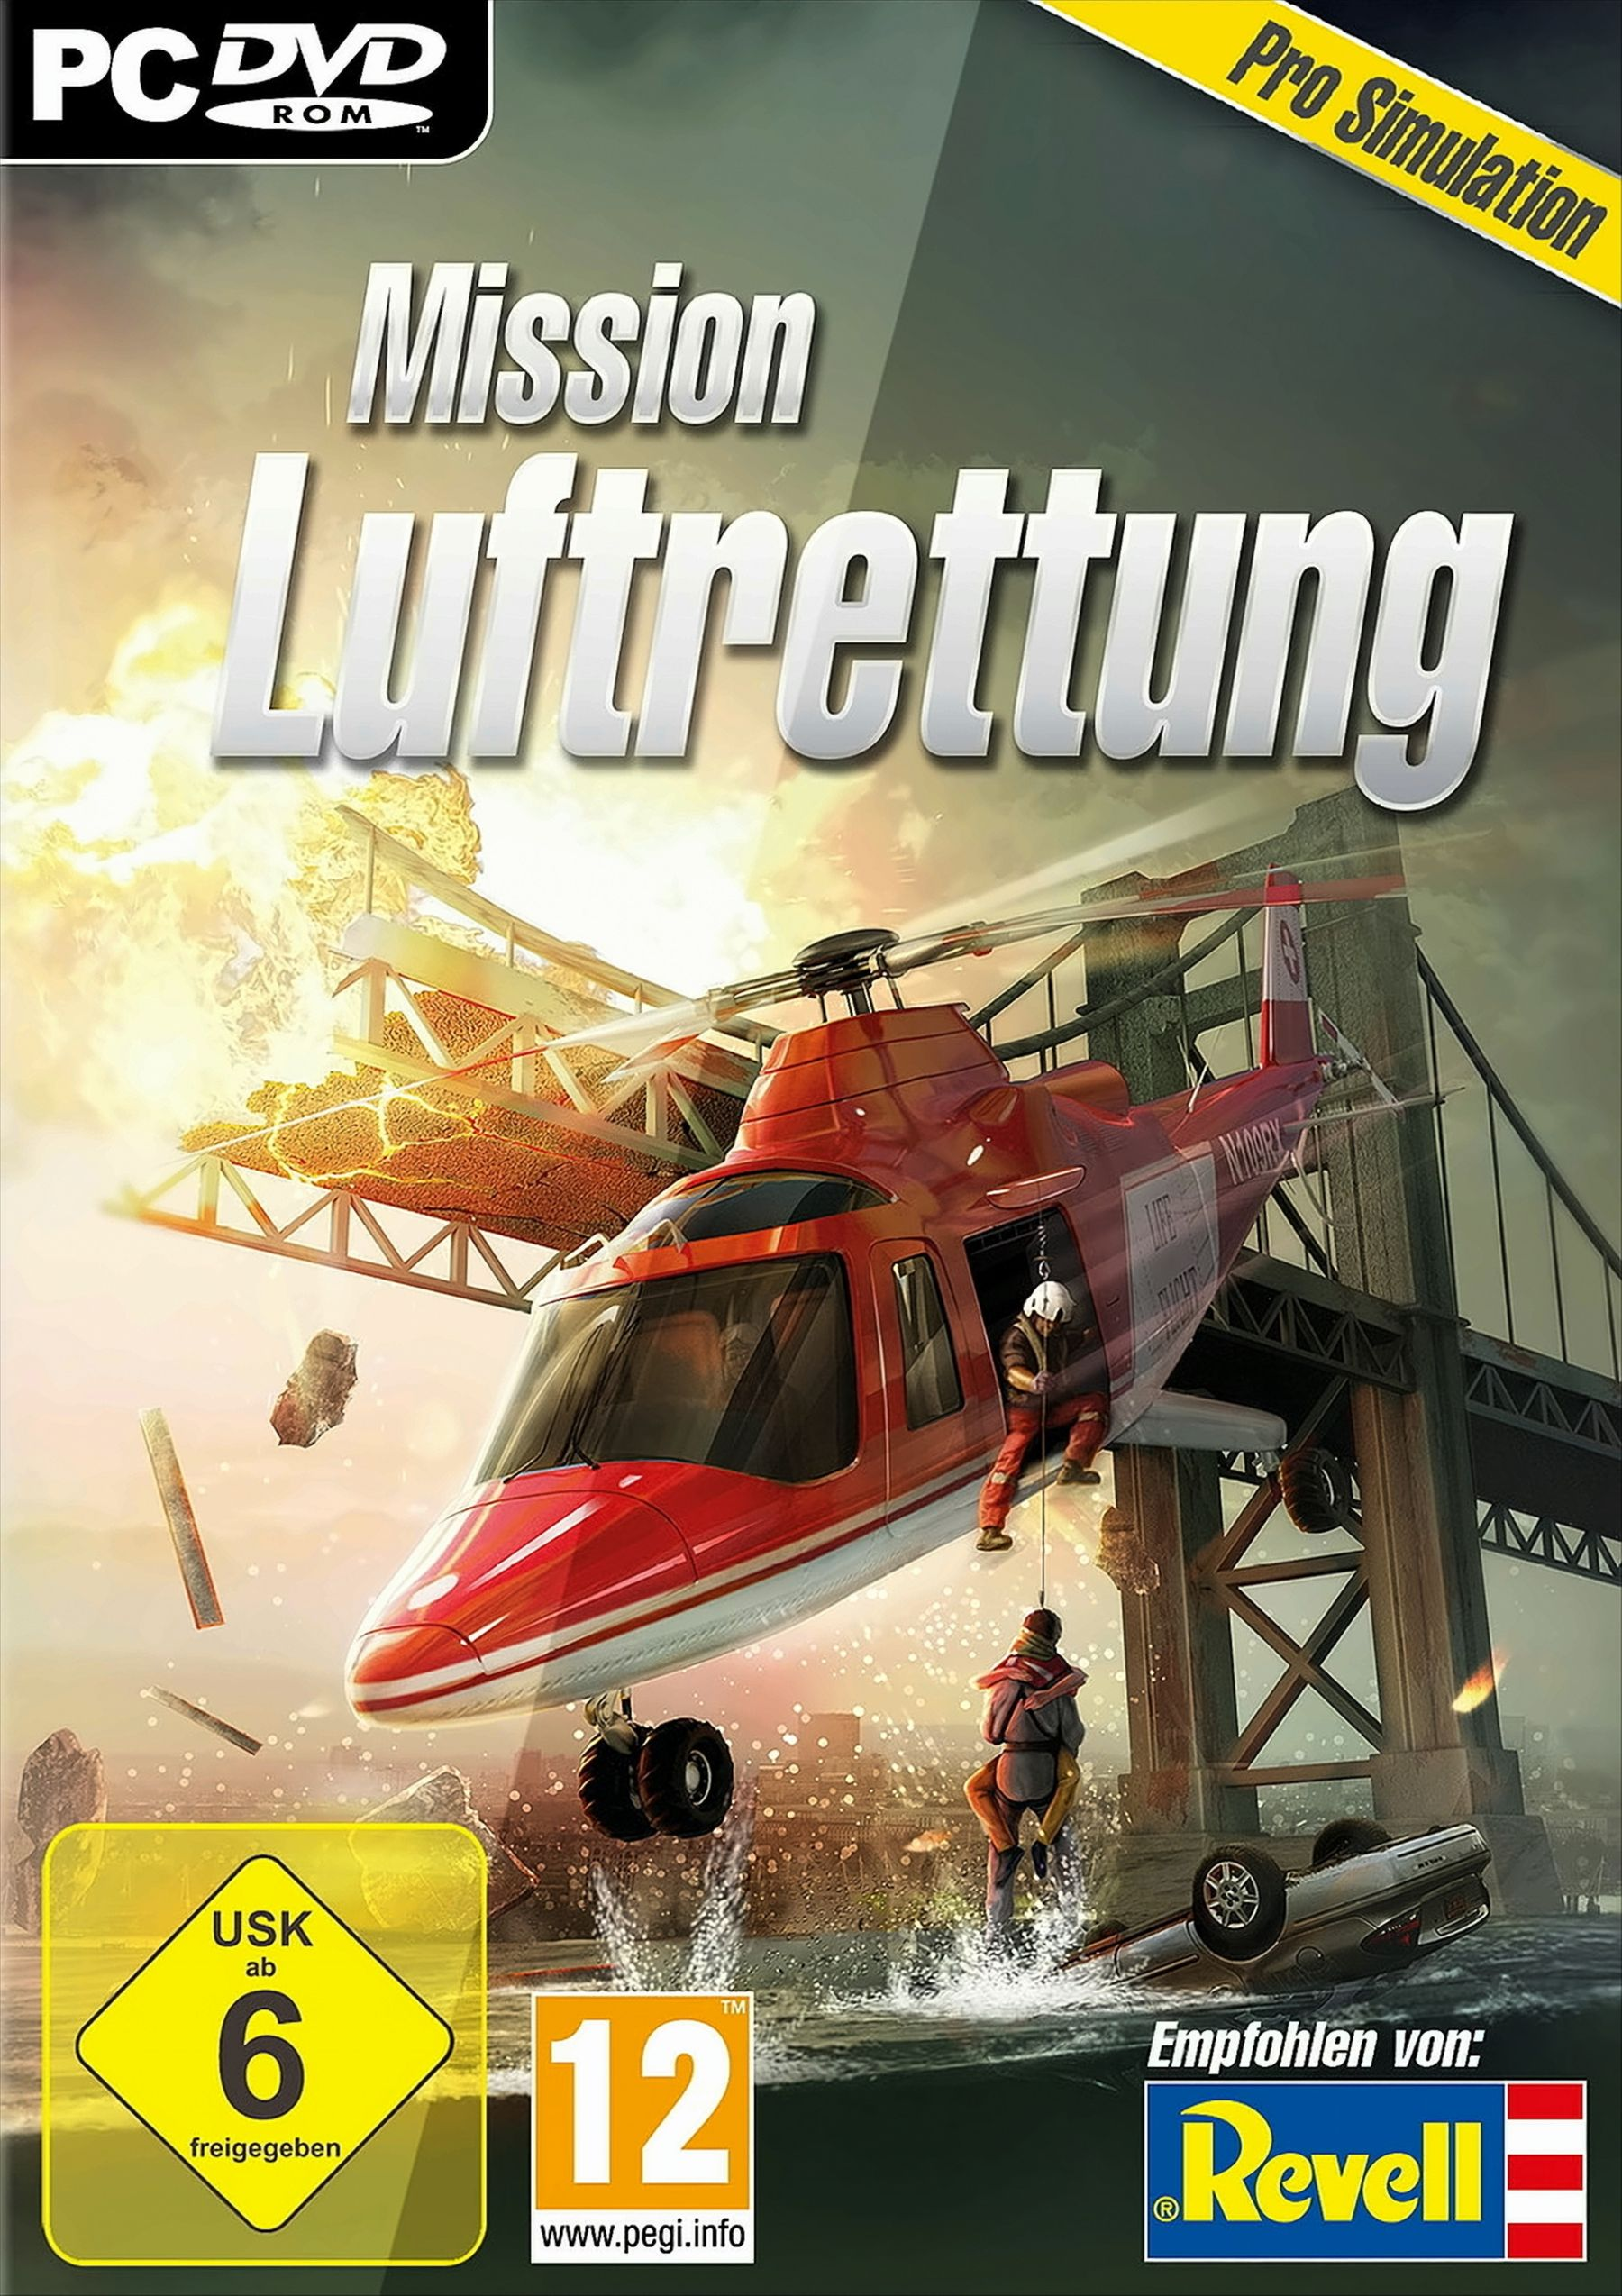 Luftrettung [PC] - Mission